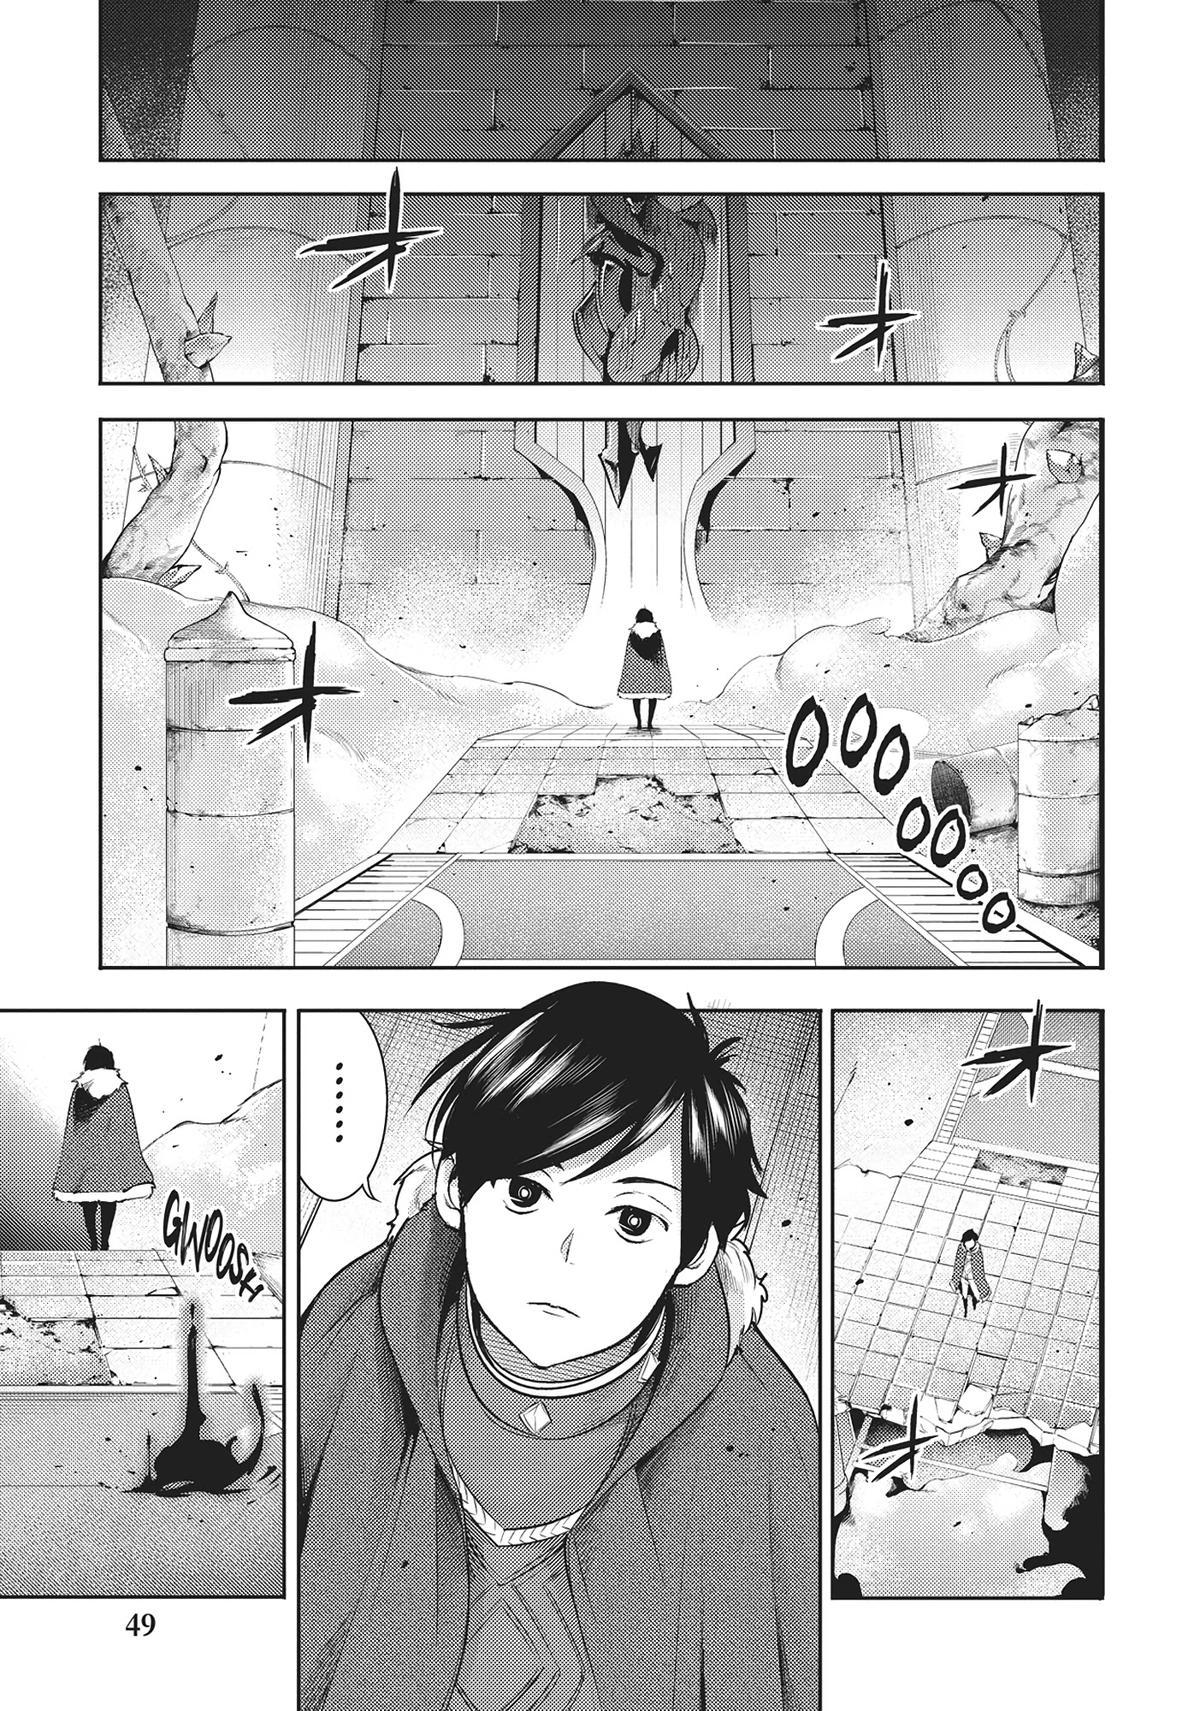 World's End Harem - Fantasia Vol.3 Ch.12.1 Page 6 - Mangago